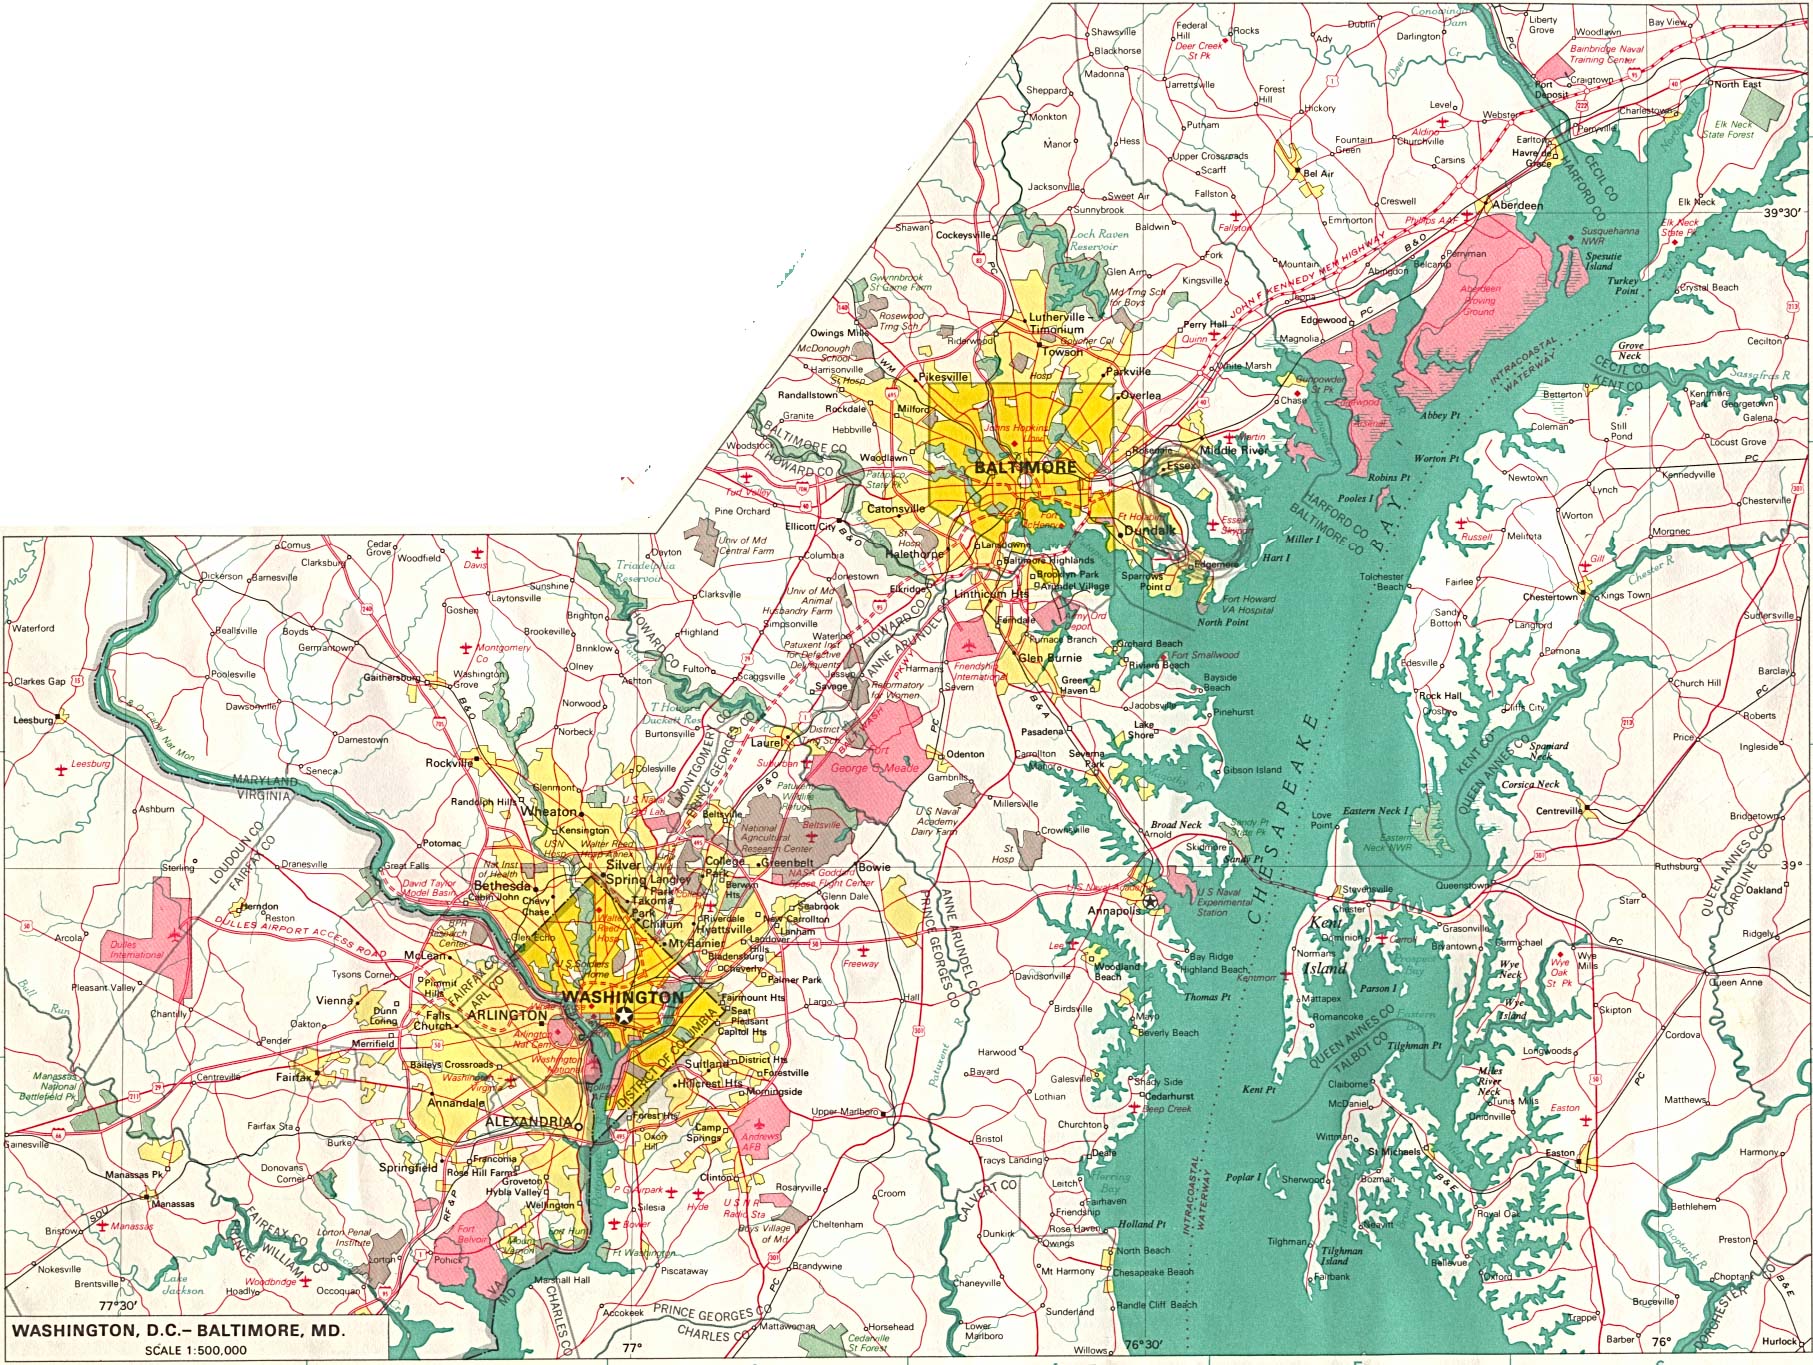  Maps of U.S. Metropolitan Areas. Washington, District of Columbia 1970 (665K) 